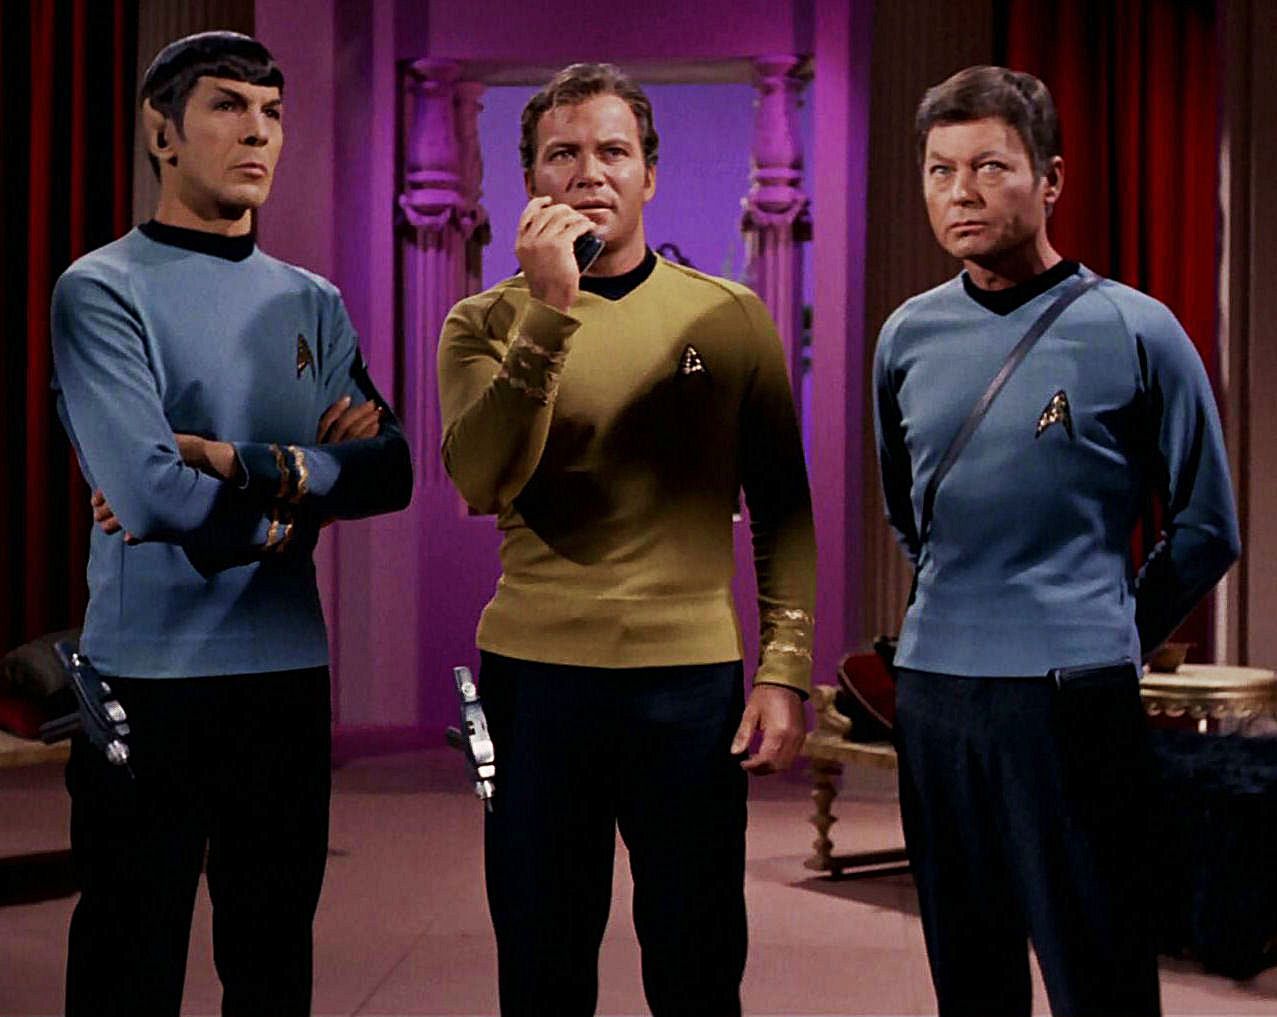 Kirk Star Trek